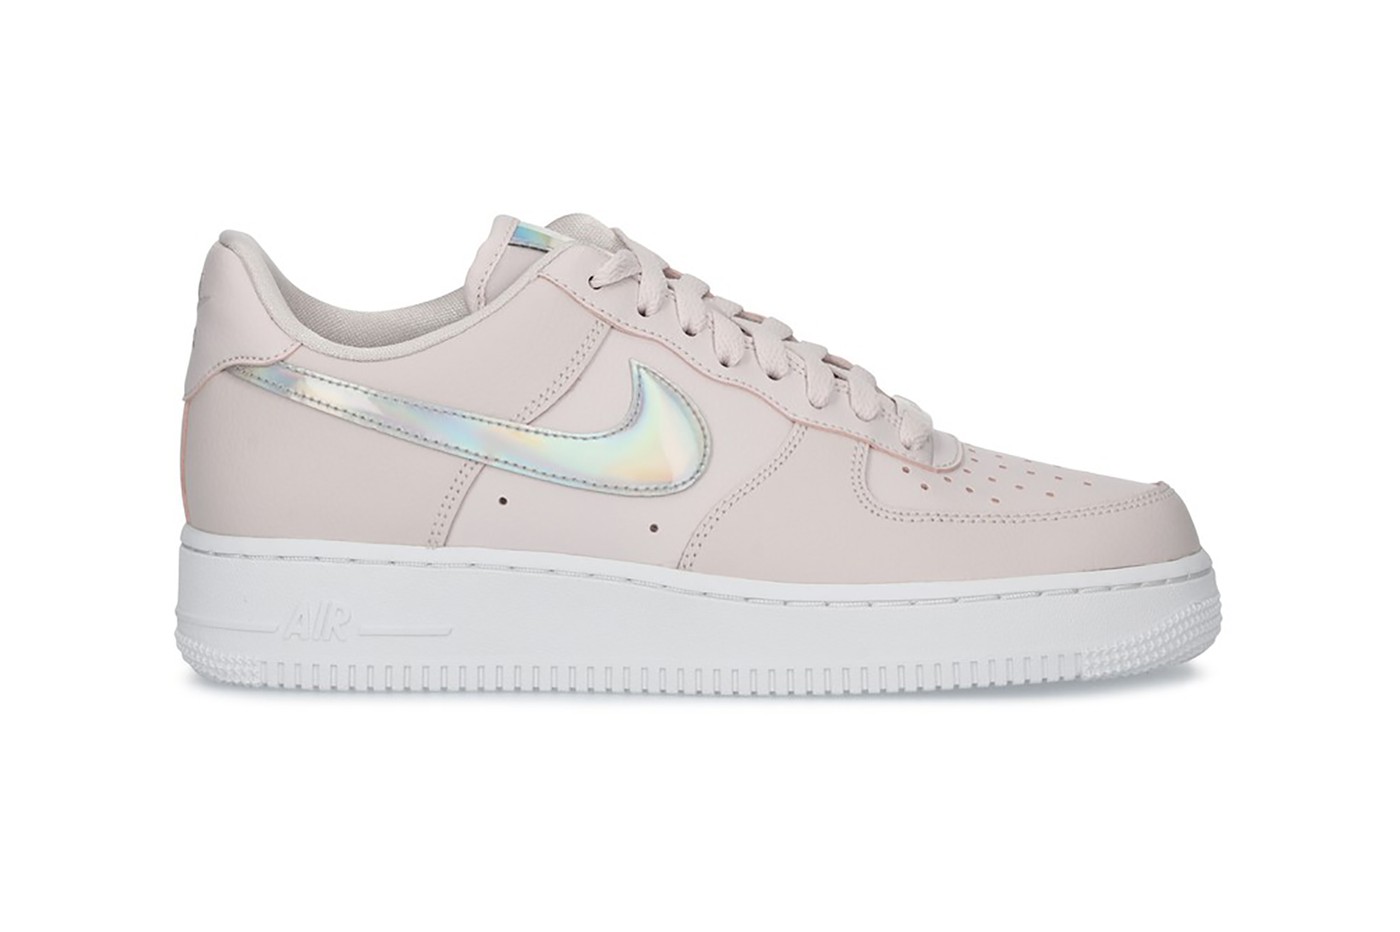 nike air force 1 07 womens sneakers pastel pink silver metallic colorway release info